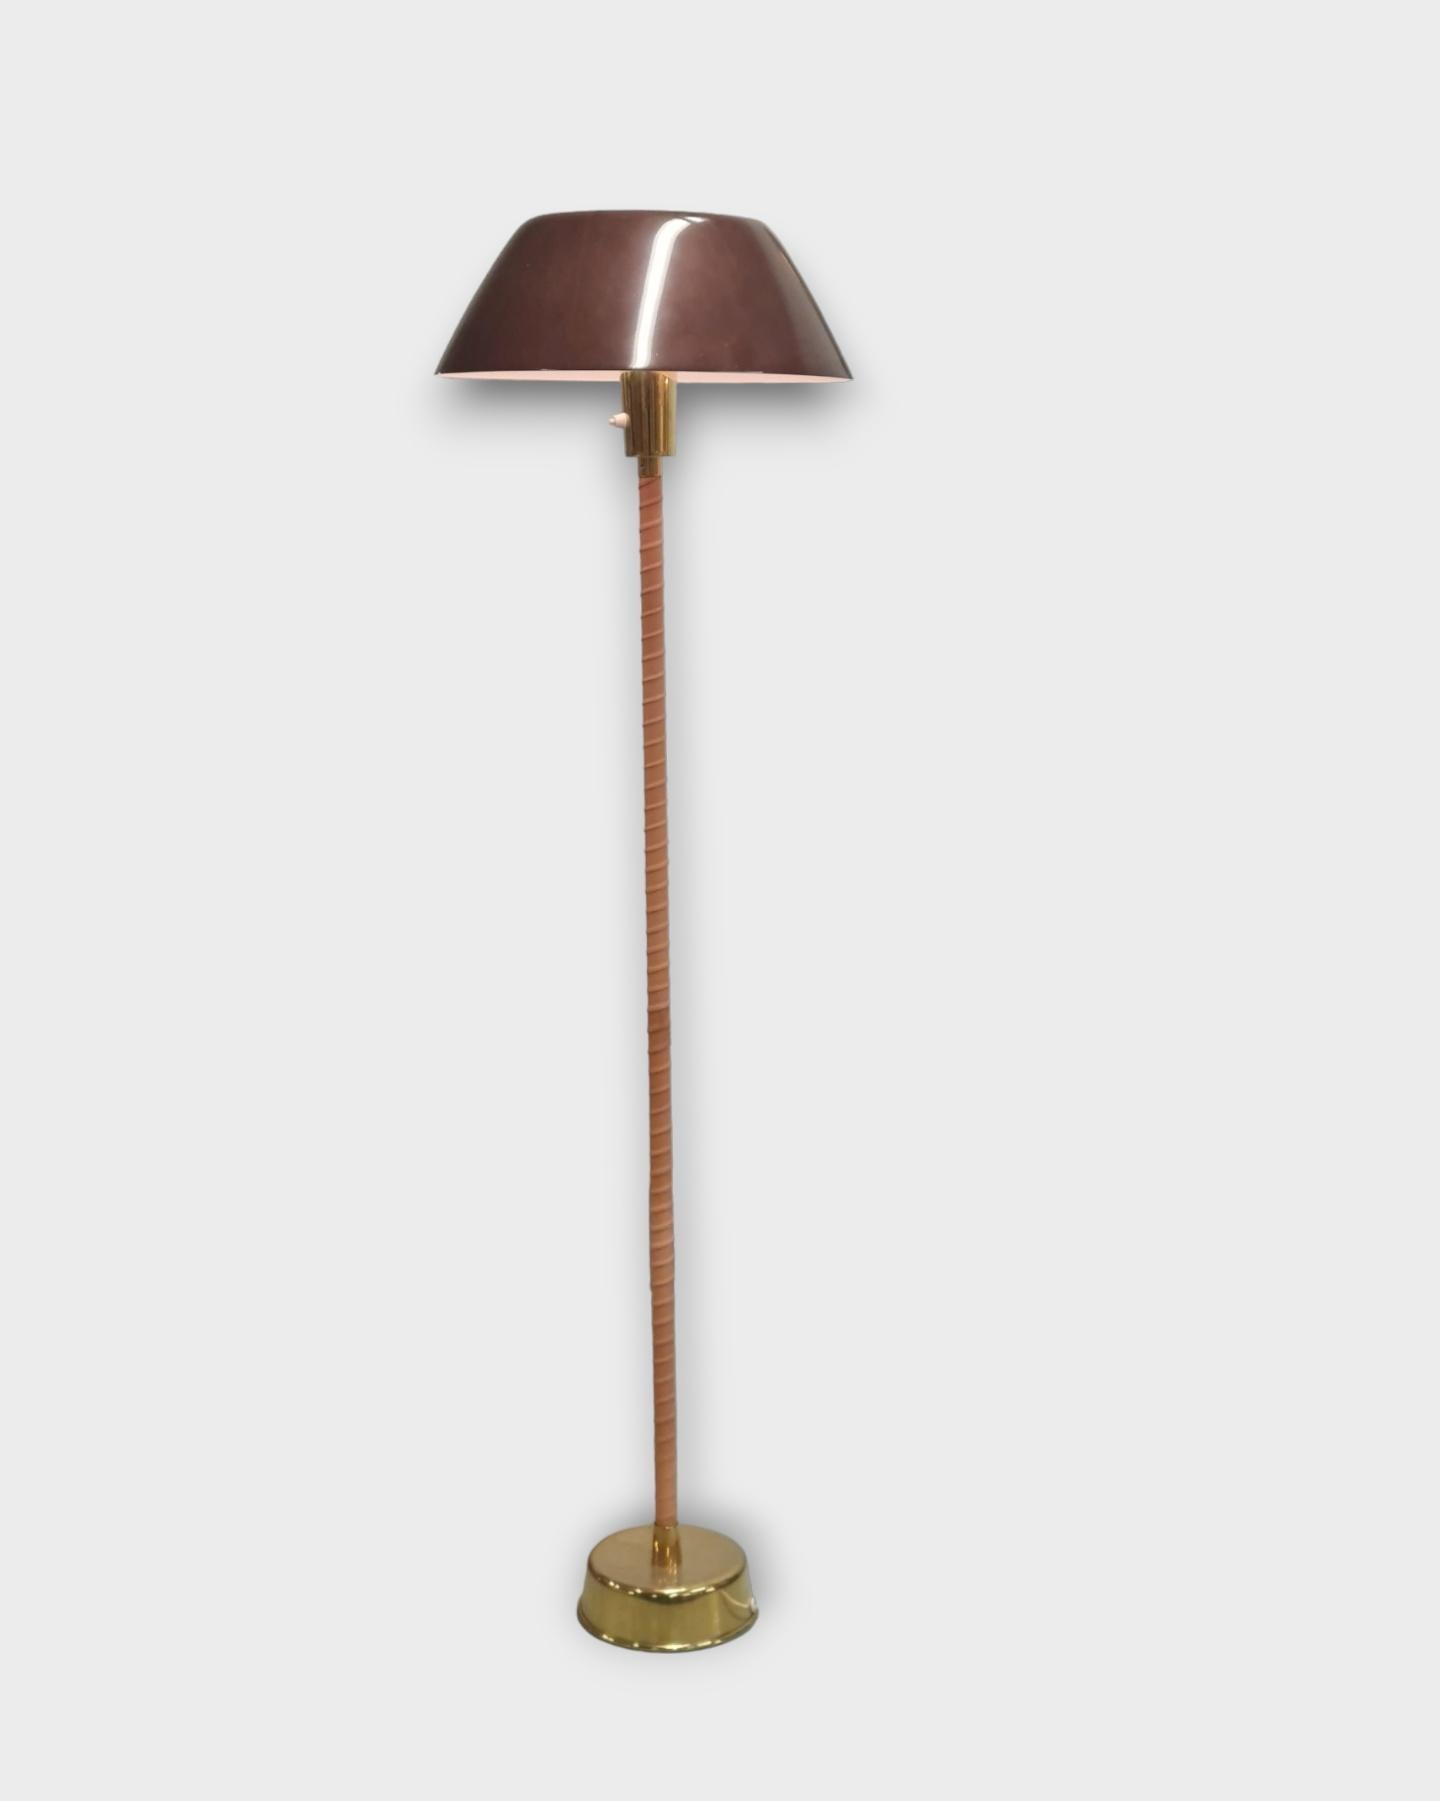 Scandinavian Modern Lisa Johansson-Pape Floor Lamp by Orno For Sale